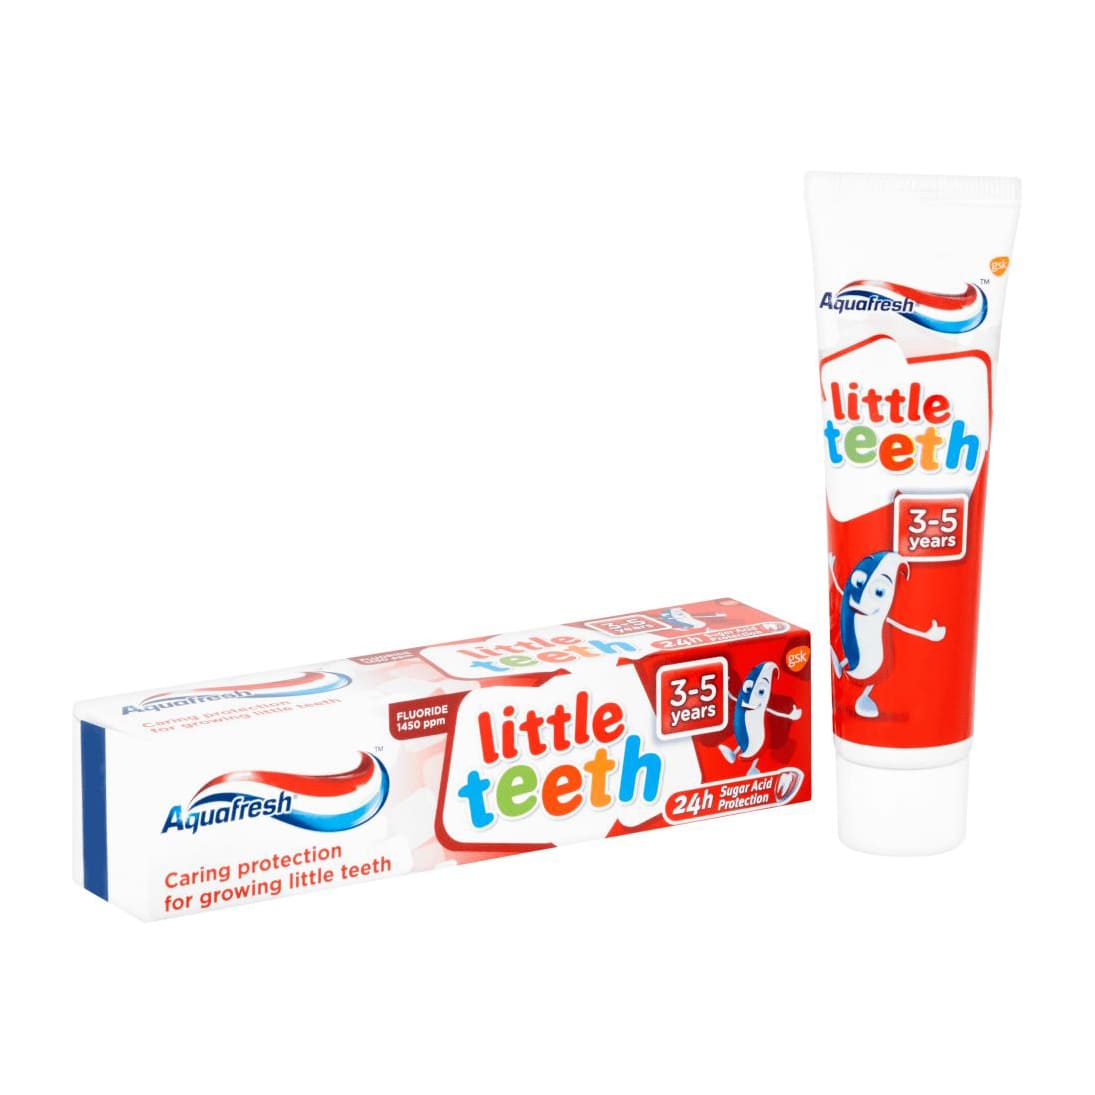 Aquafresh Little Teeth Toothpaste 3 - 5 Years - 50ml - Bloom Pharmacy